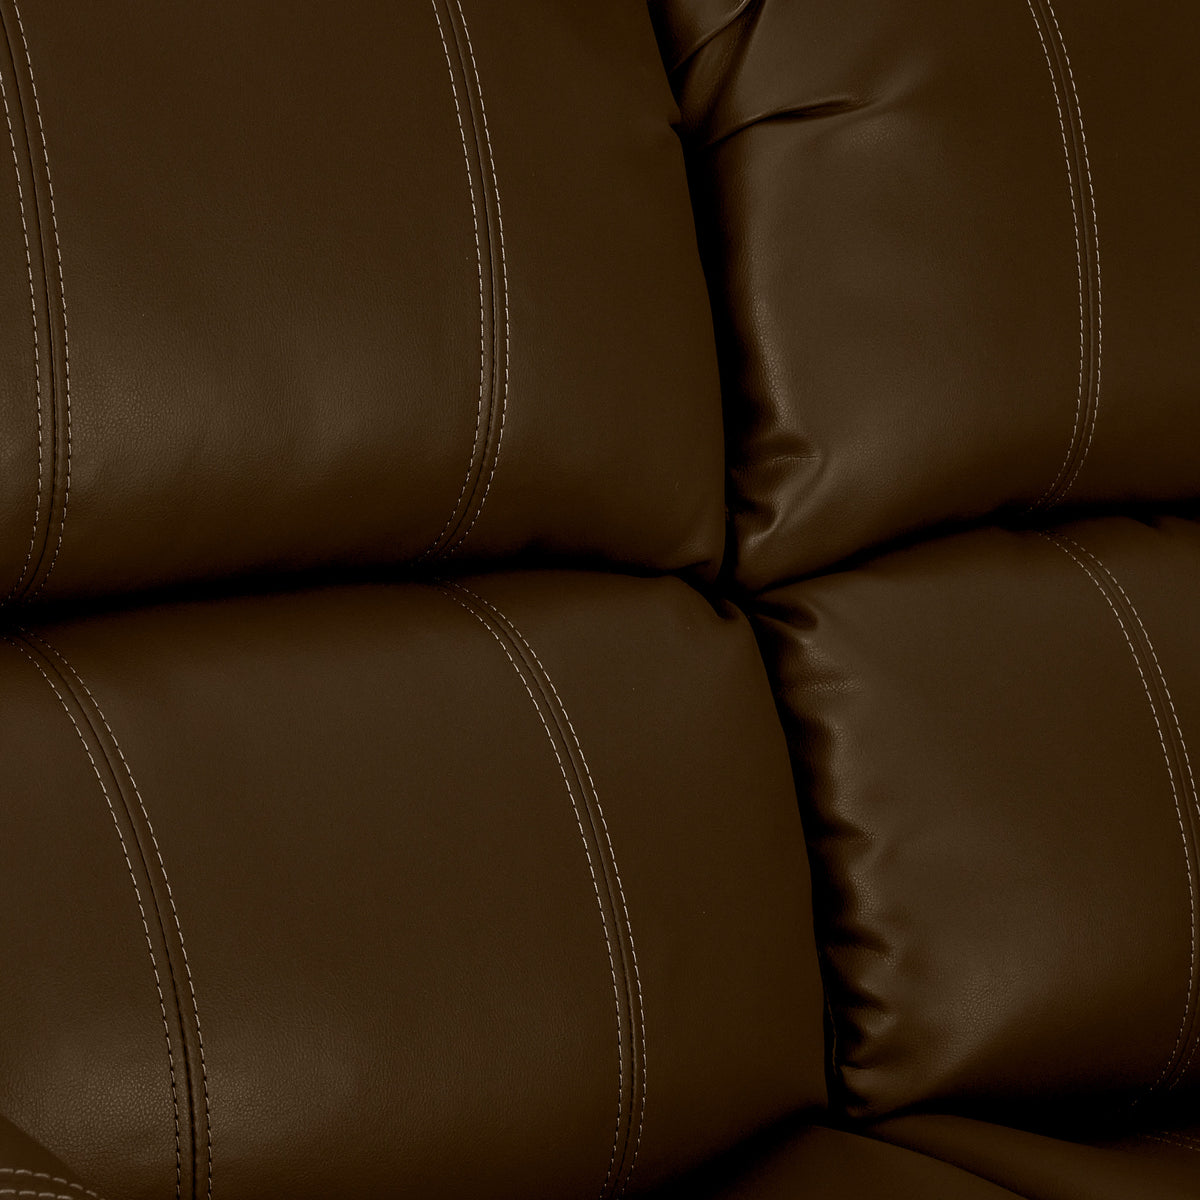 Anton Brown Leather Reclining Corner Sofa